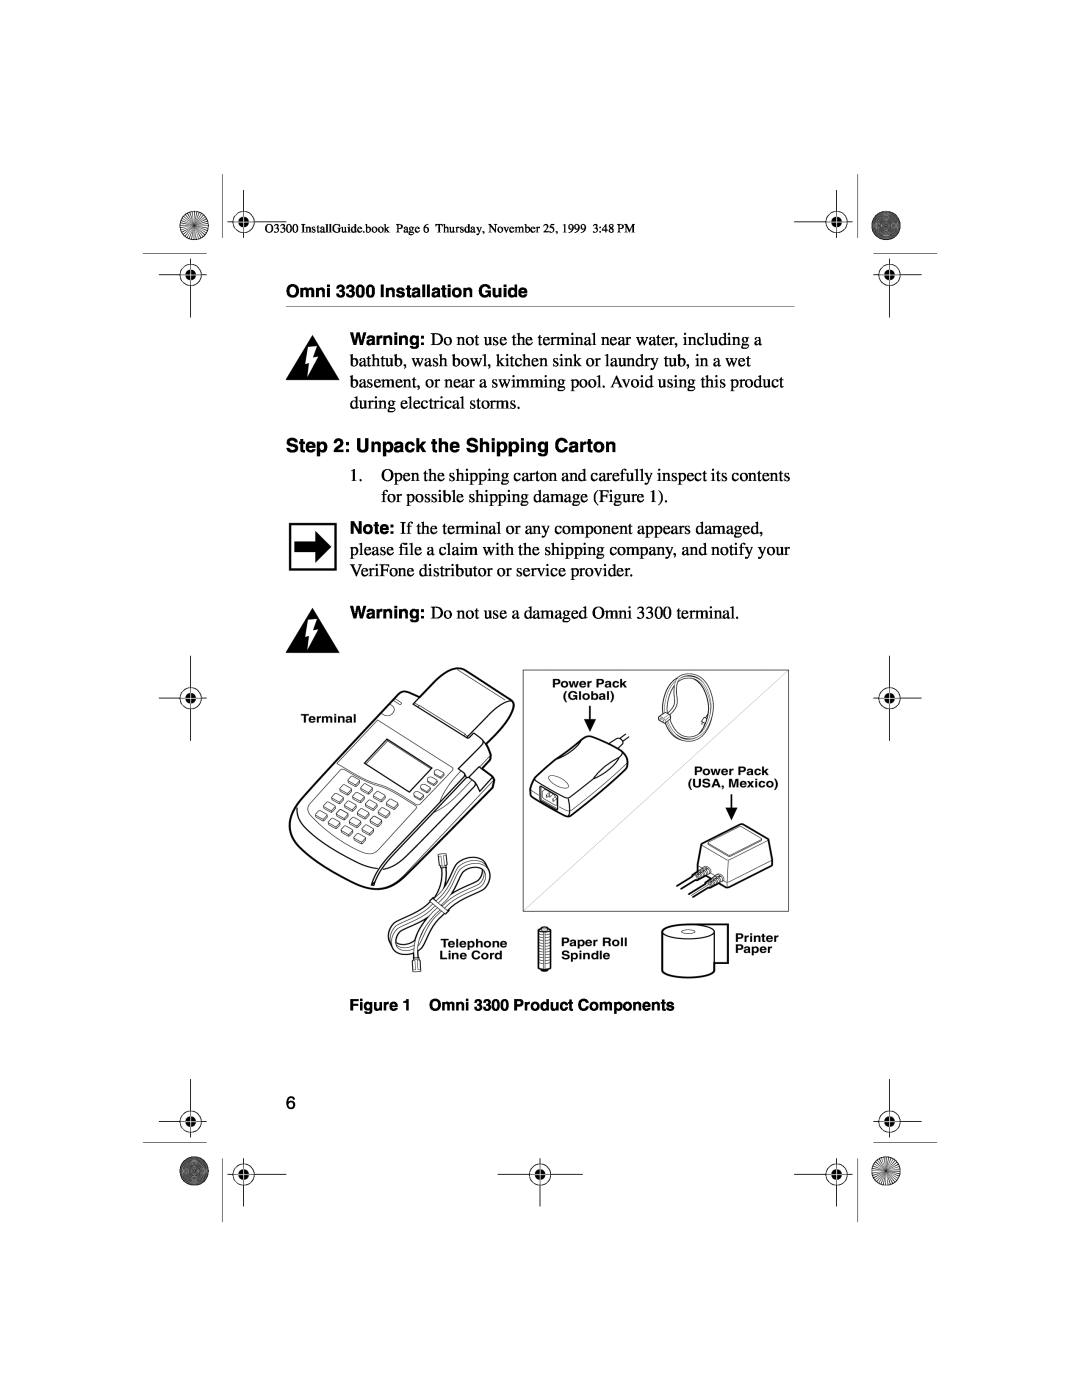 VeriFone manual Unpack the Shipping Carton, Omni 3300 Installation Guide 